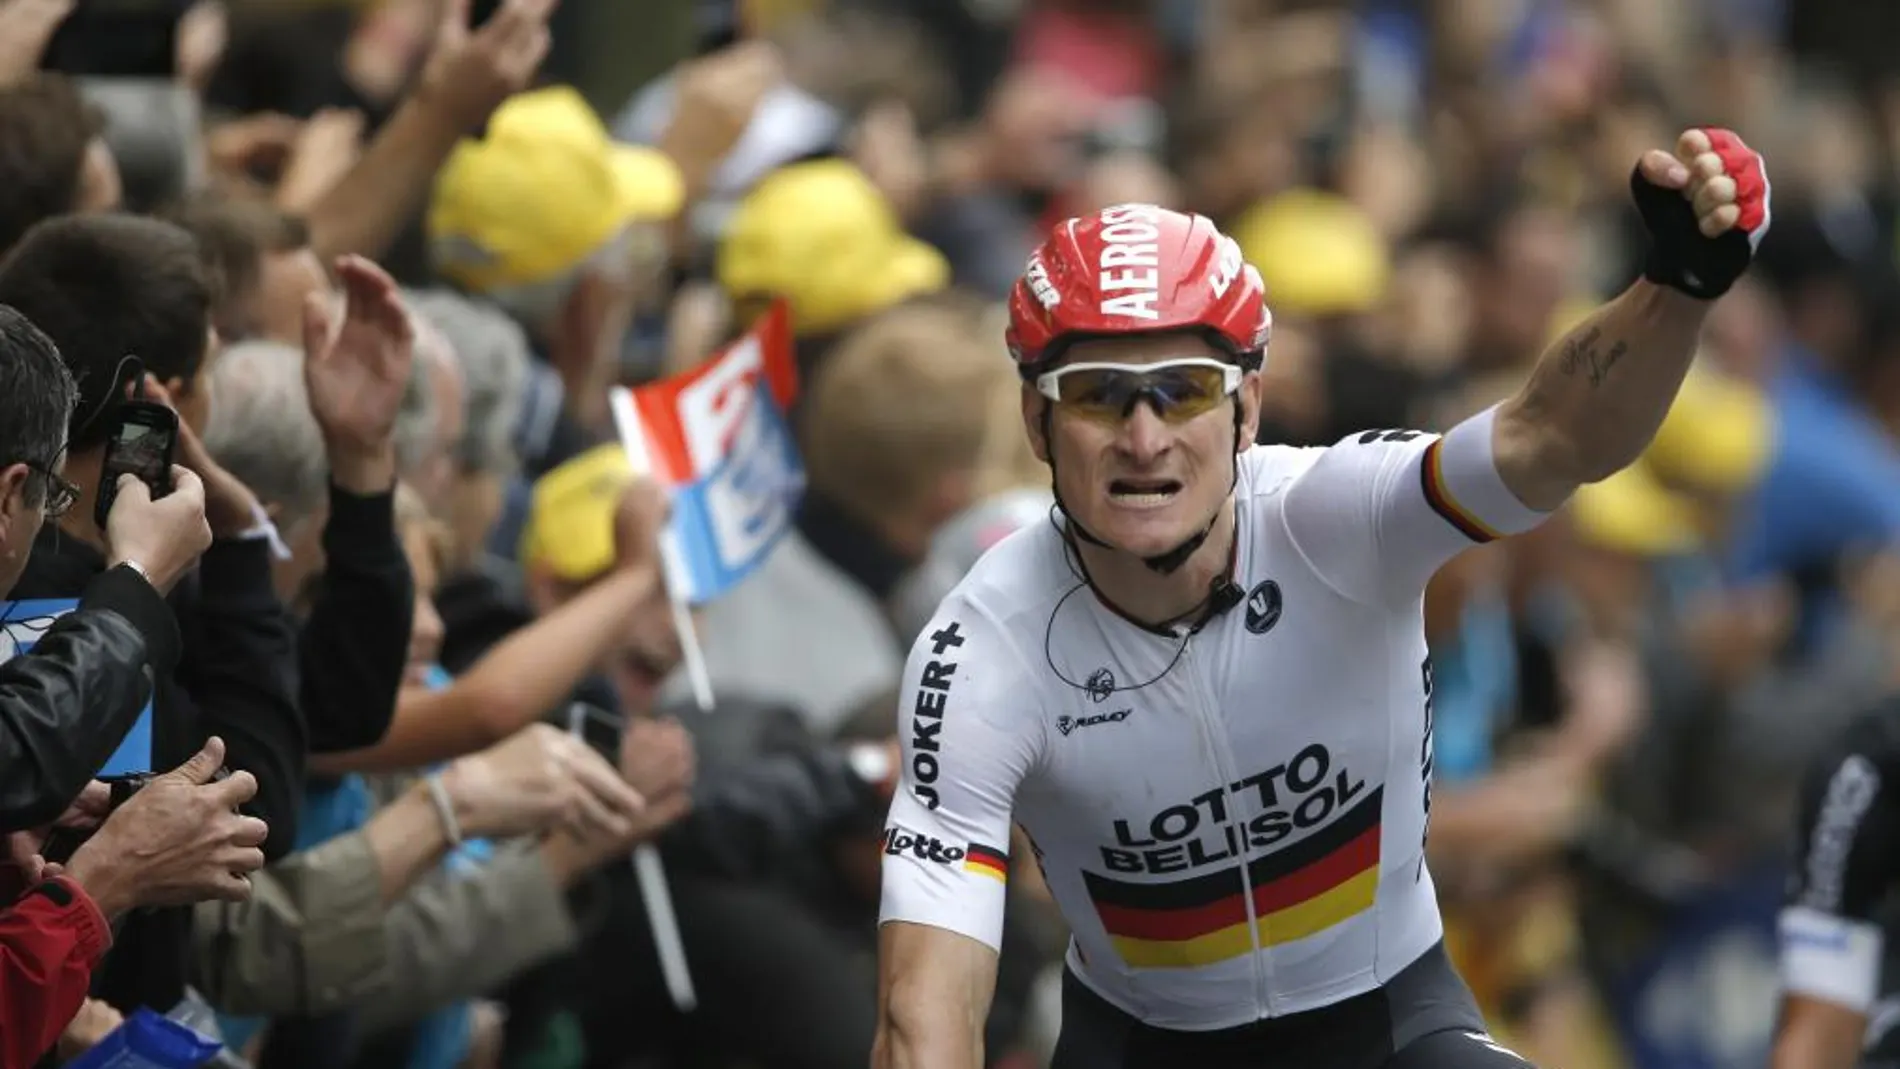 Andre Greipel celebra con el brazo en alto su victoria en la etapa.